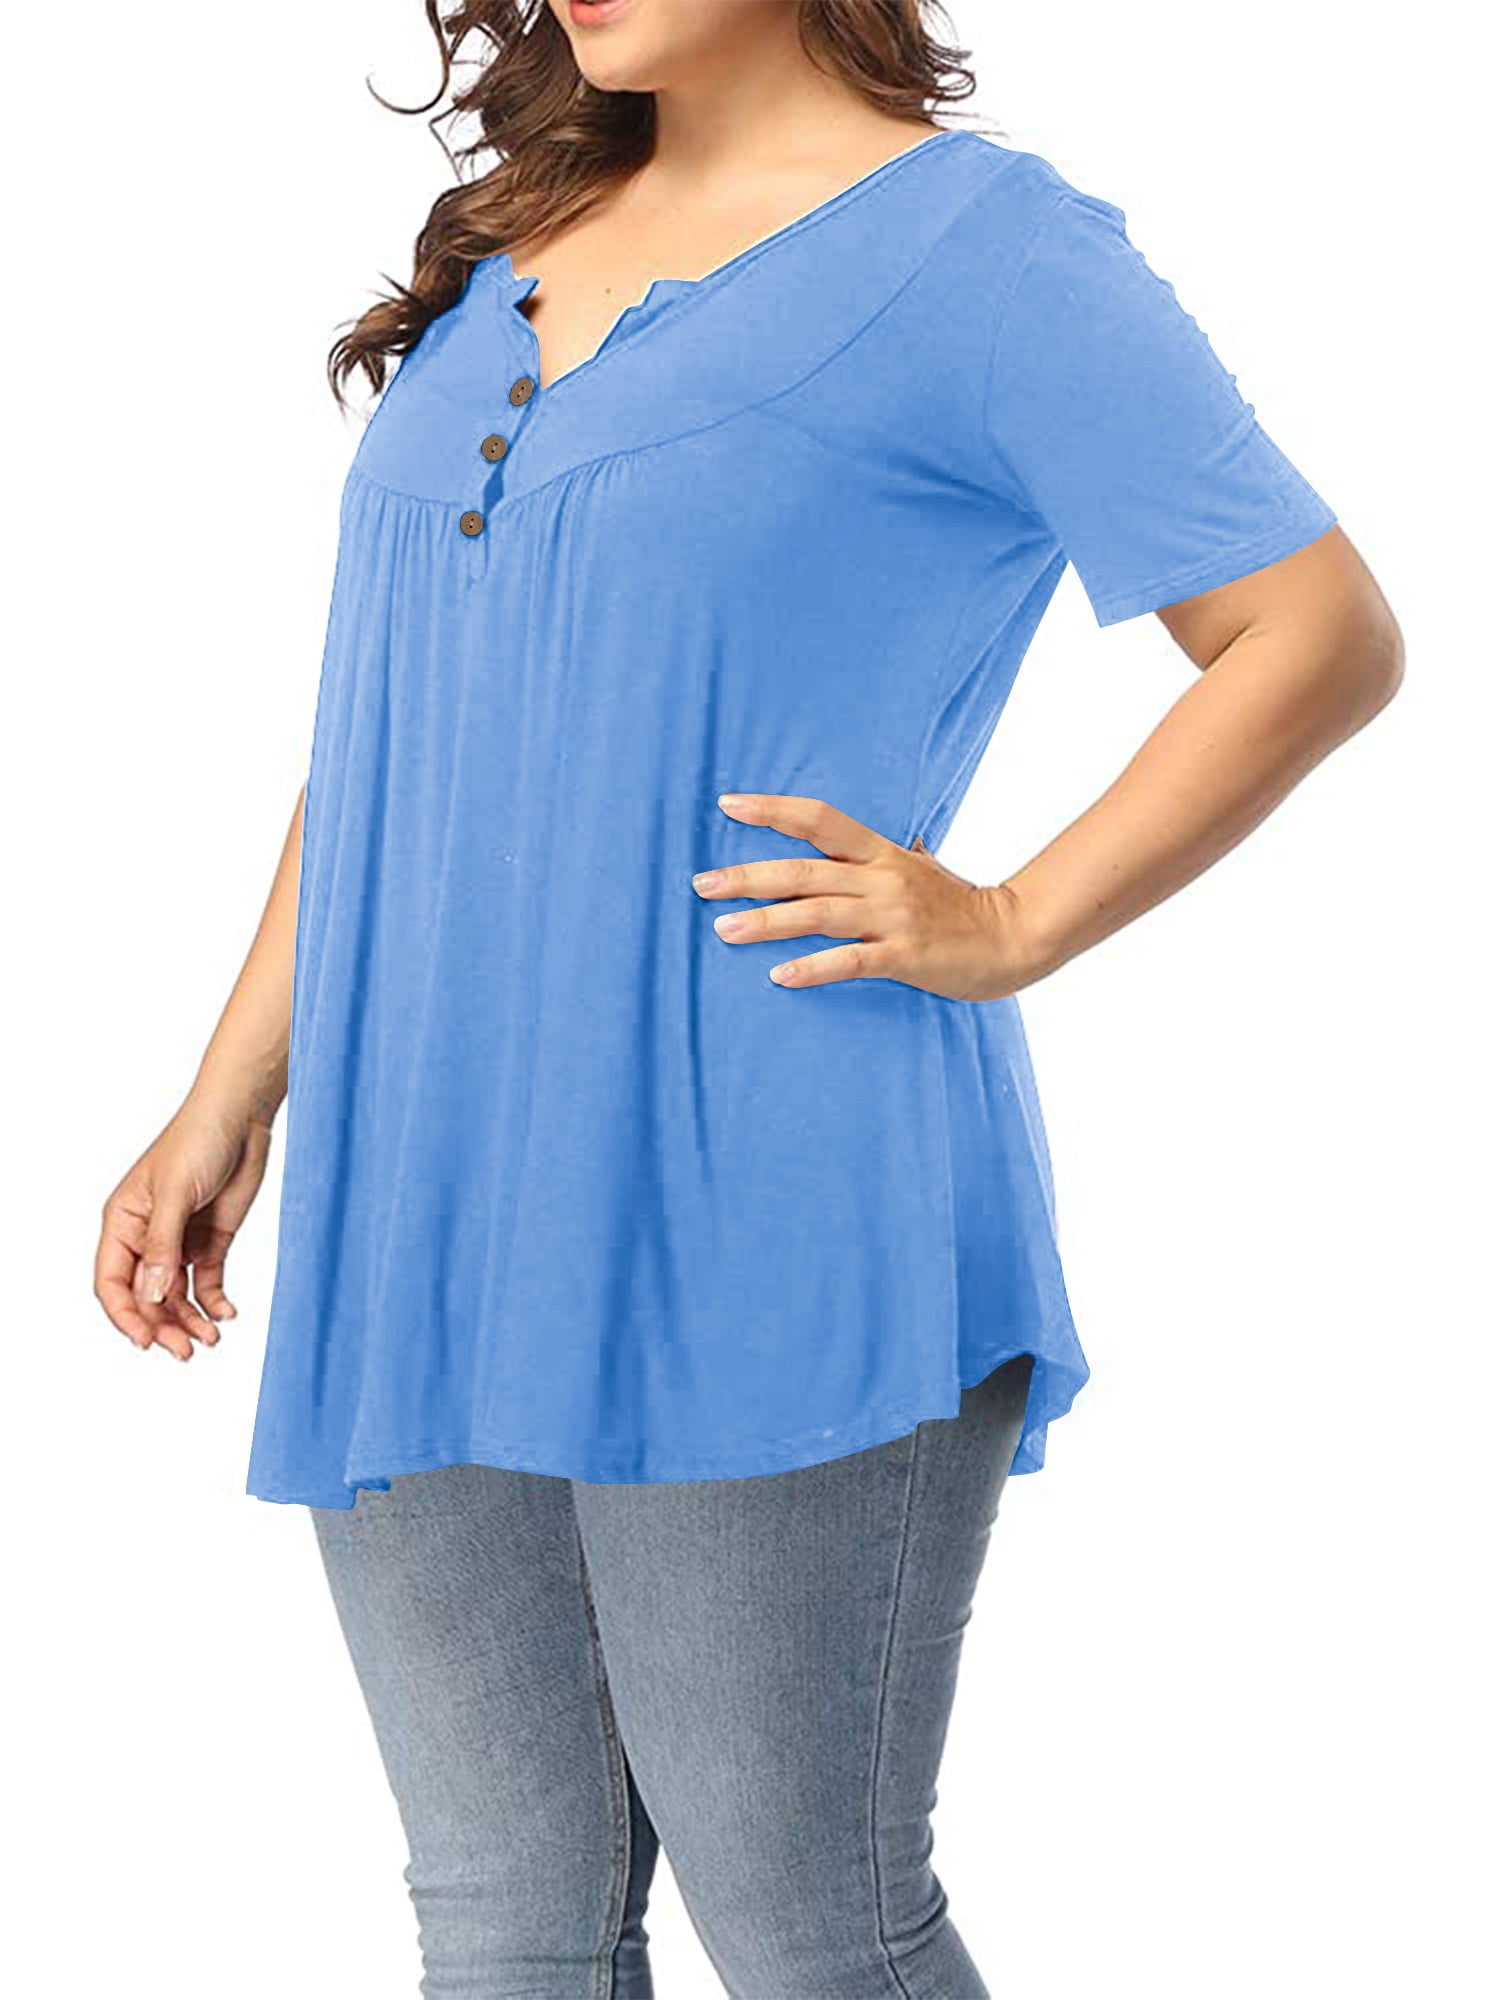 VISLILY Womens Plus Size XL-4XL Lace Short Sleeve A-Line Tunics Top Blouse Shirt 